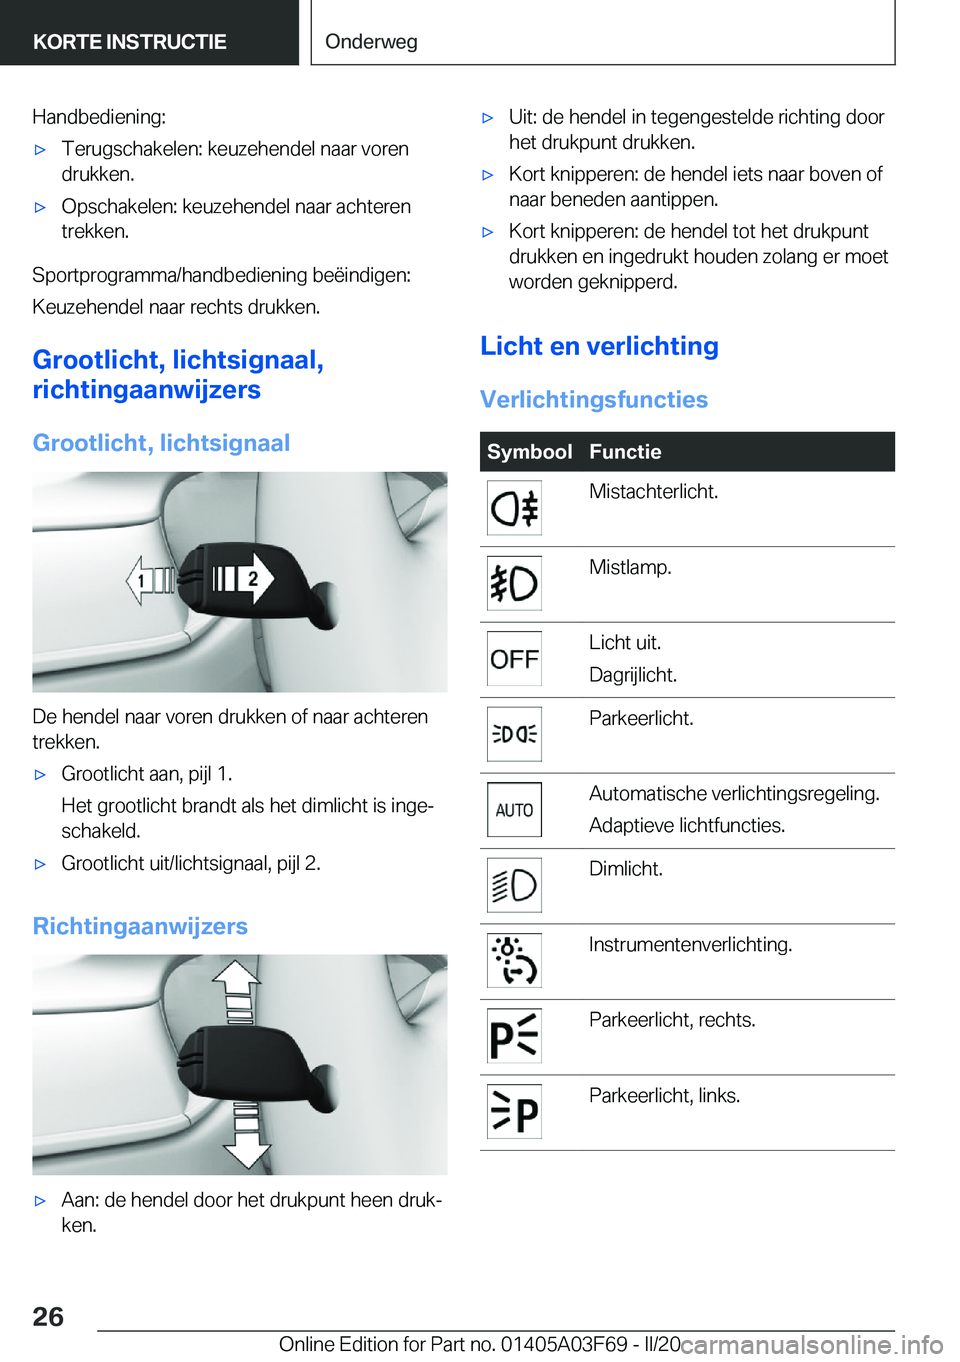 BMW 3 SERIES 2020  Instructieboekjes (in Dutch) �H�a�n�d�b�e�d�i�e�n�i�n�g�:'x�T�e�r�u�g�s�c�h�a�k�e�l�e�n�:��k�e�u�z�e�h�e�n�d�e�l��n�a�a�r��v�o�r�e�n
�d�r�u�k�k�e�n�.'x�O�p�s�c�h�a�k�e�l�e�n�:��k�e�u�z�e�h�e�n�d�e�l��n�a�a�r��a�c�h�